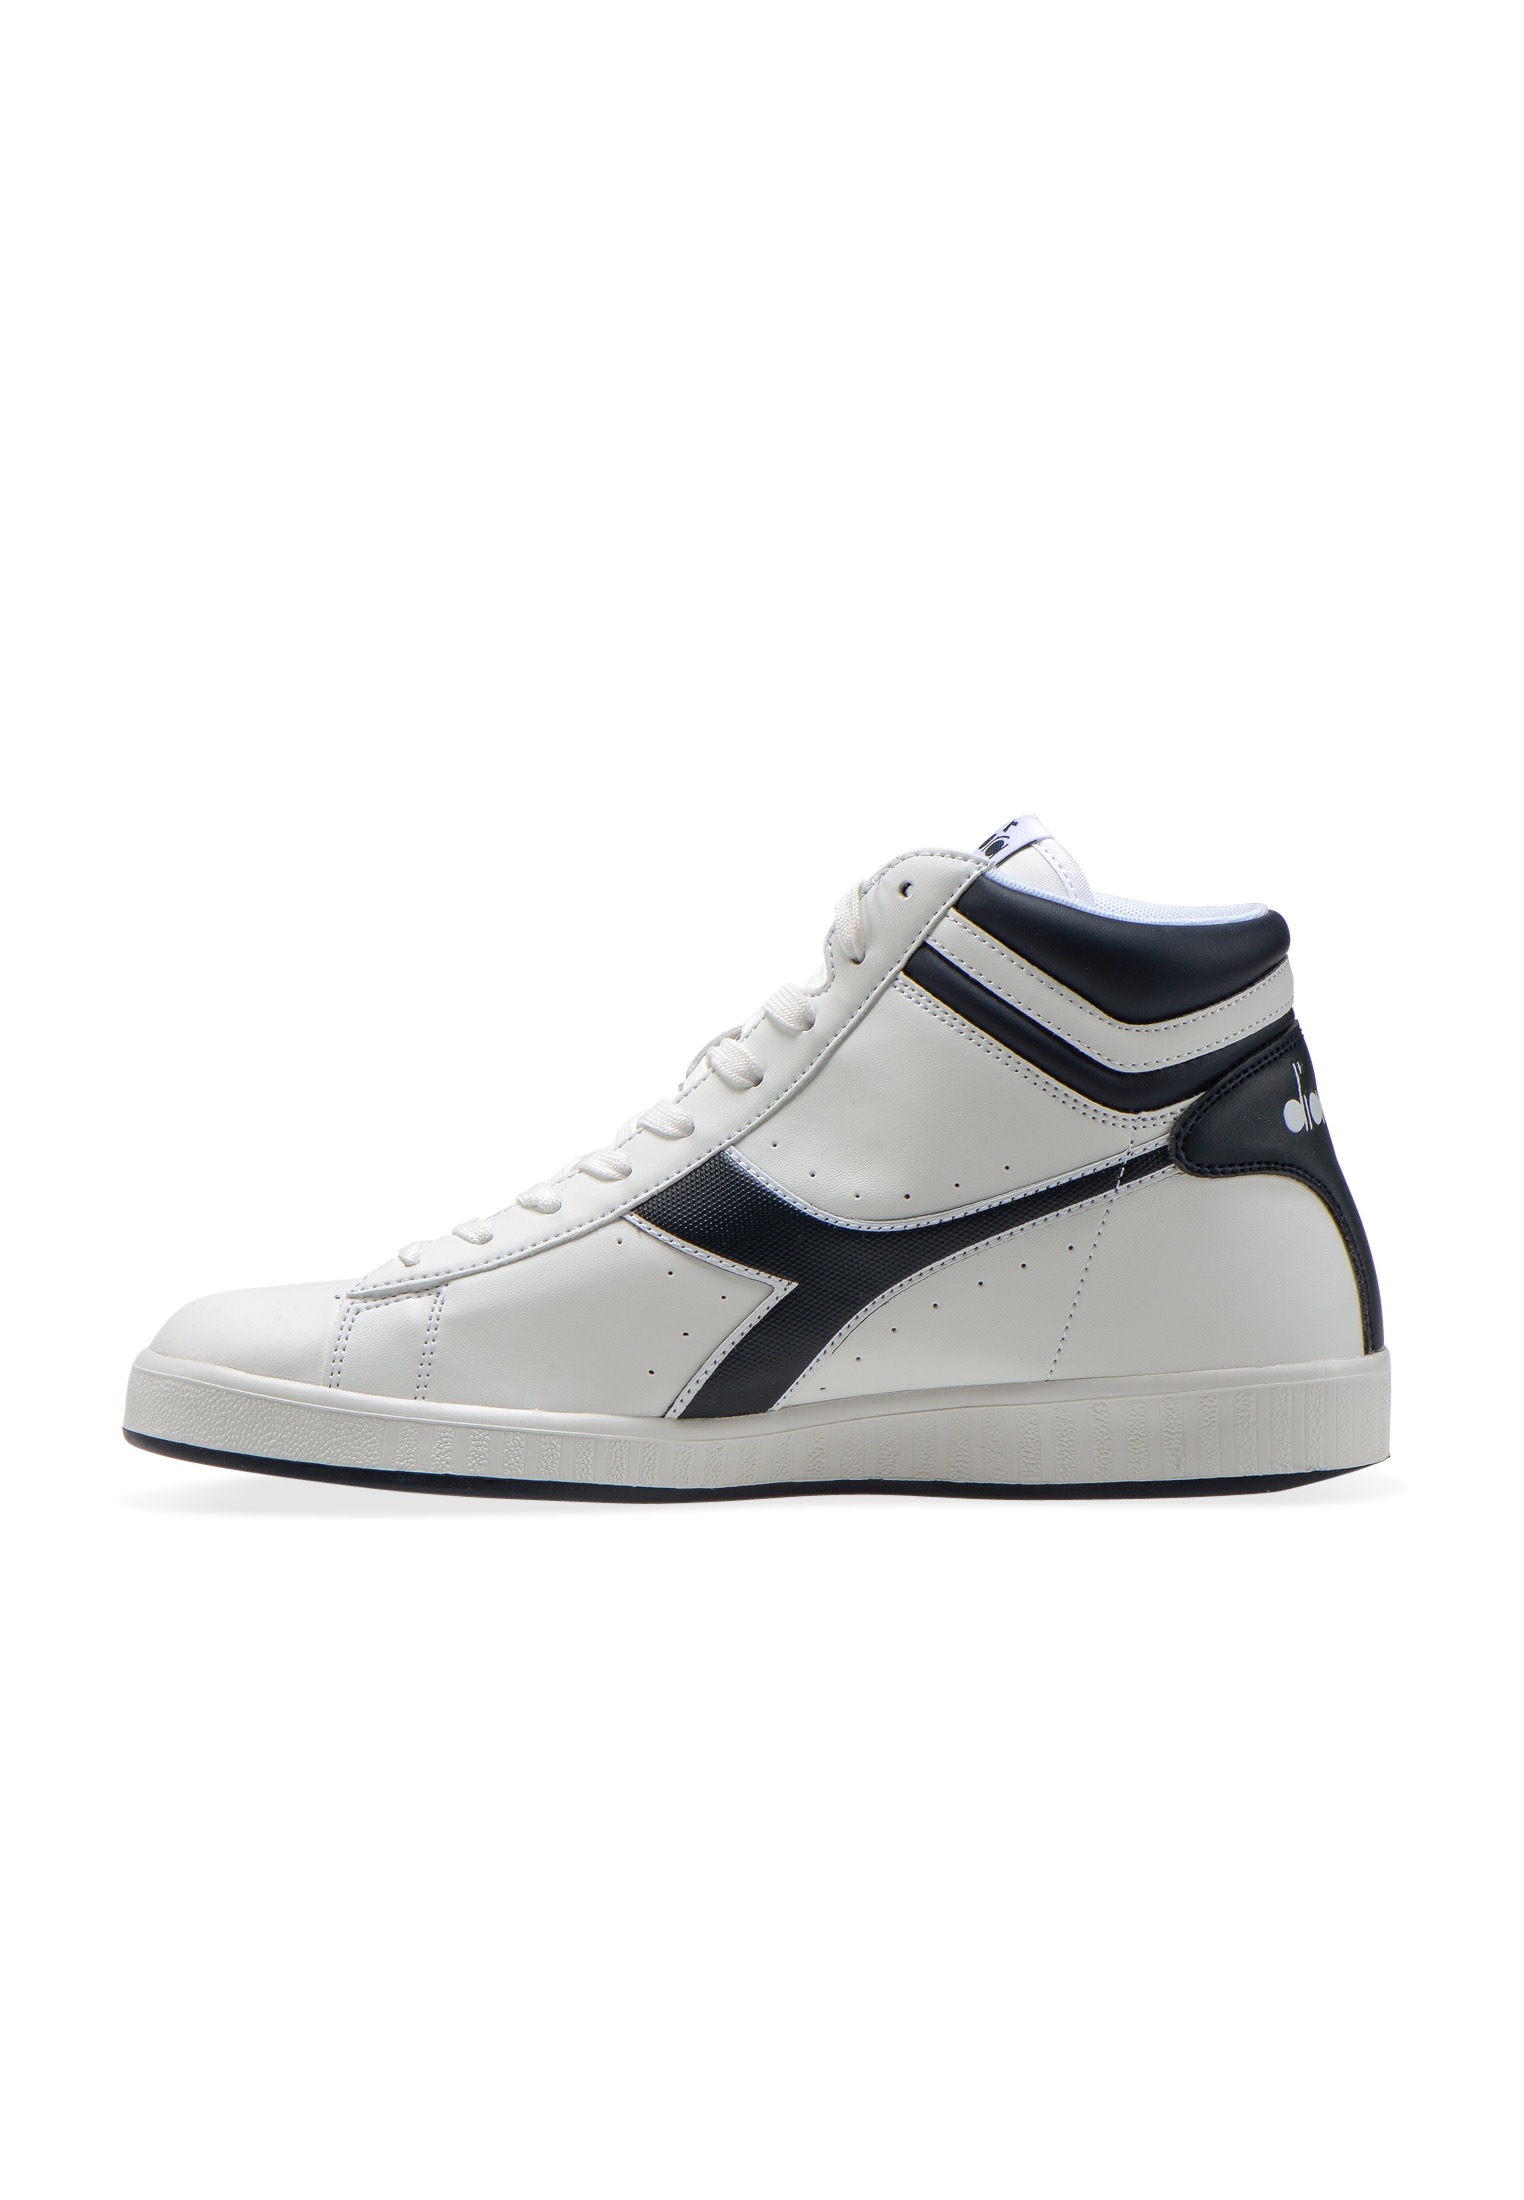 Scarpe da uomo Diadora Game P High C8215 bianco blu grigio sneaker sportiva alta